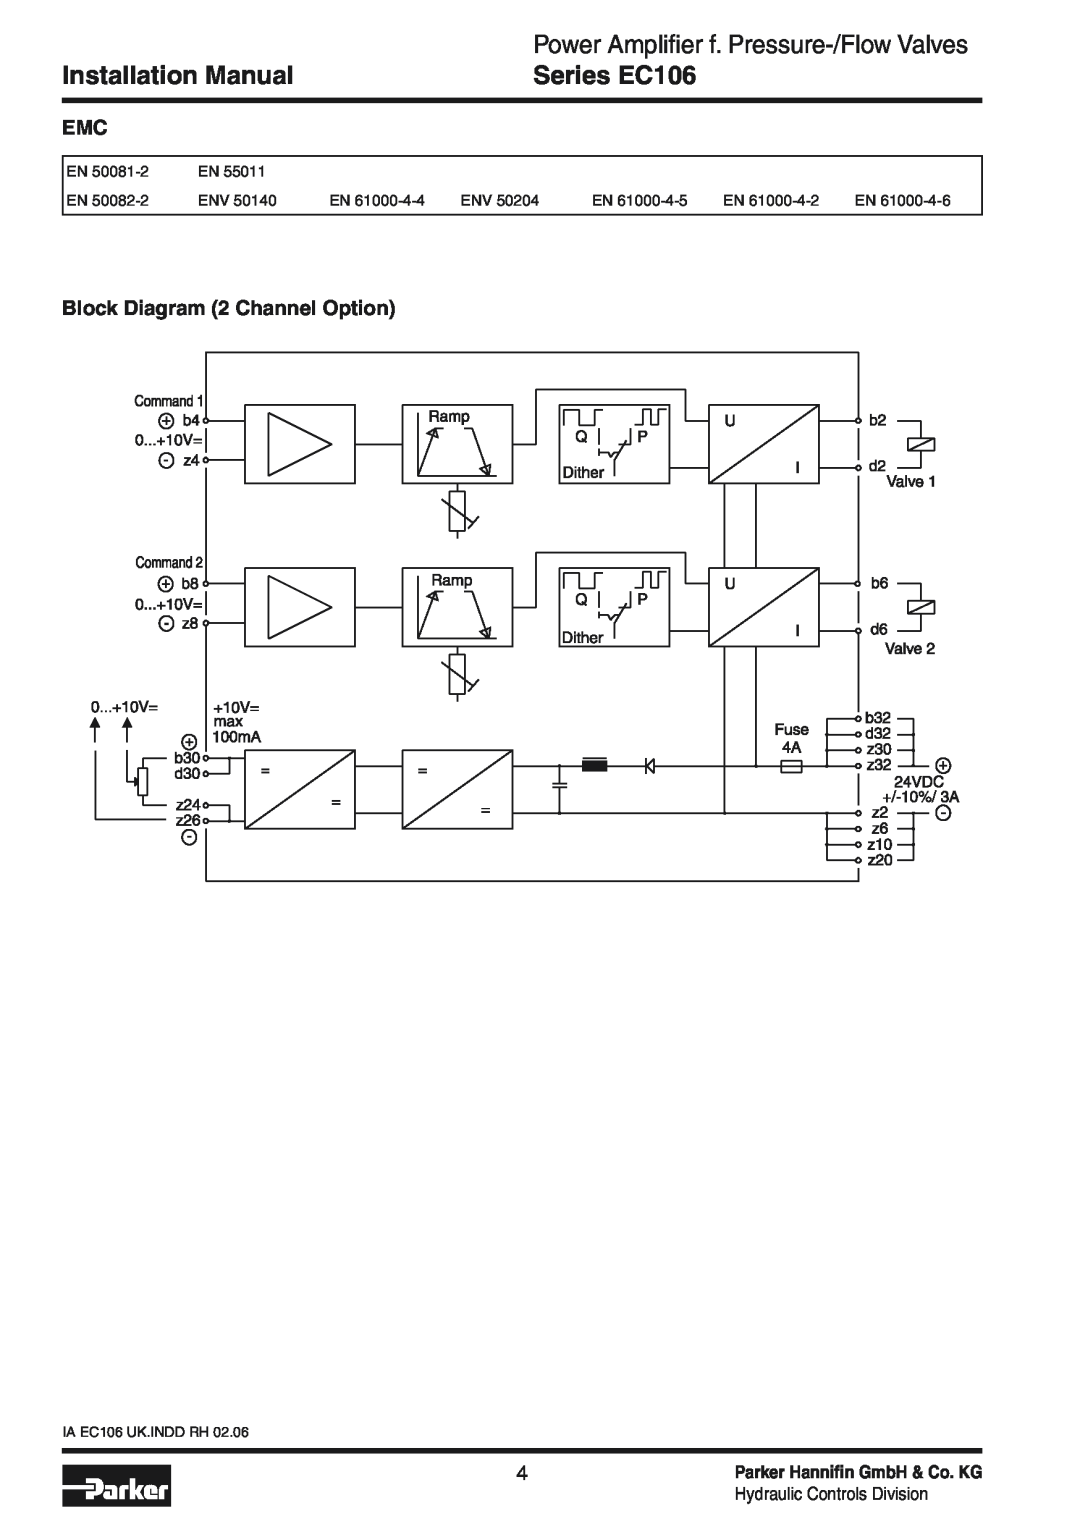 Parker Hannifin Block Diagram 2 Channel Option, Installation Manual, Series EC106, IA EC106 UK.INDD RH 